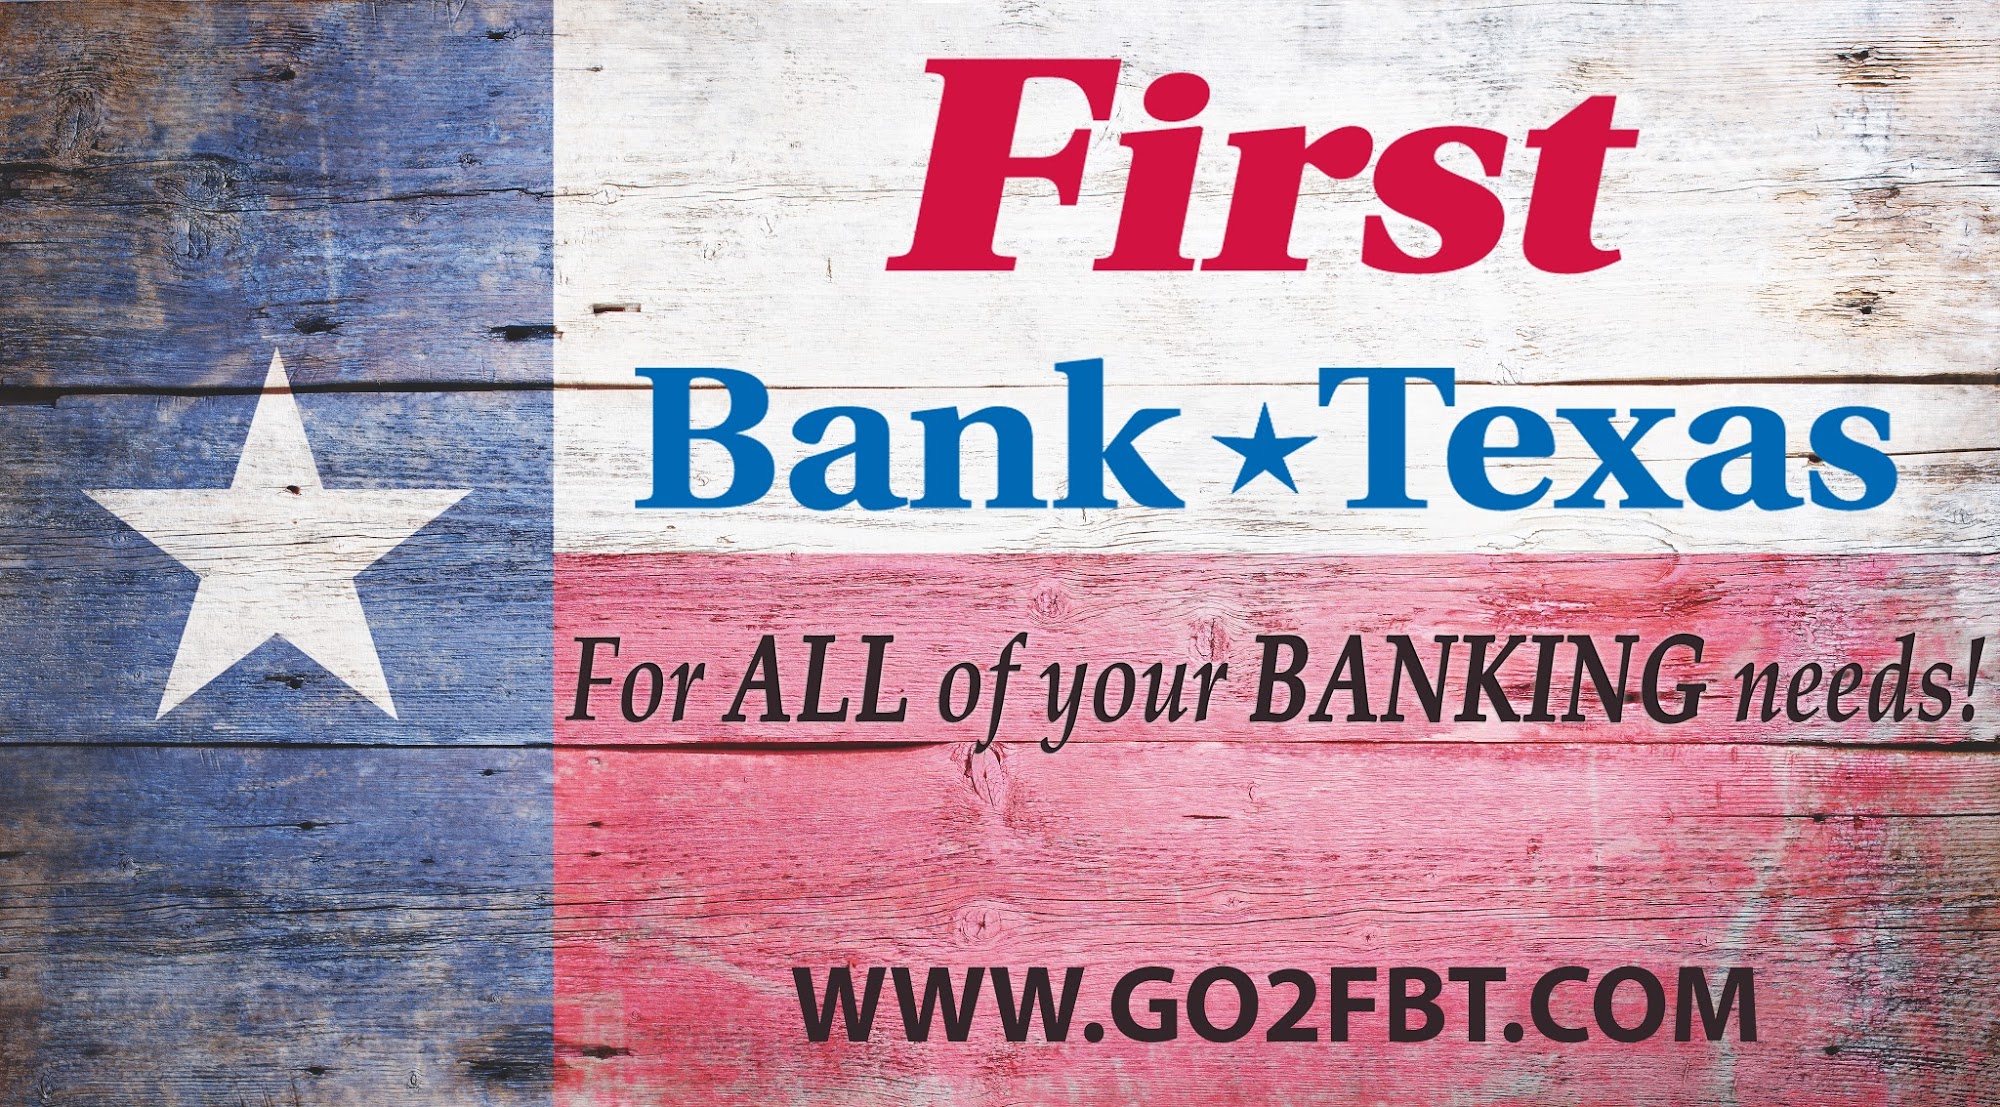 First Bank Texas